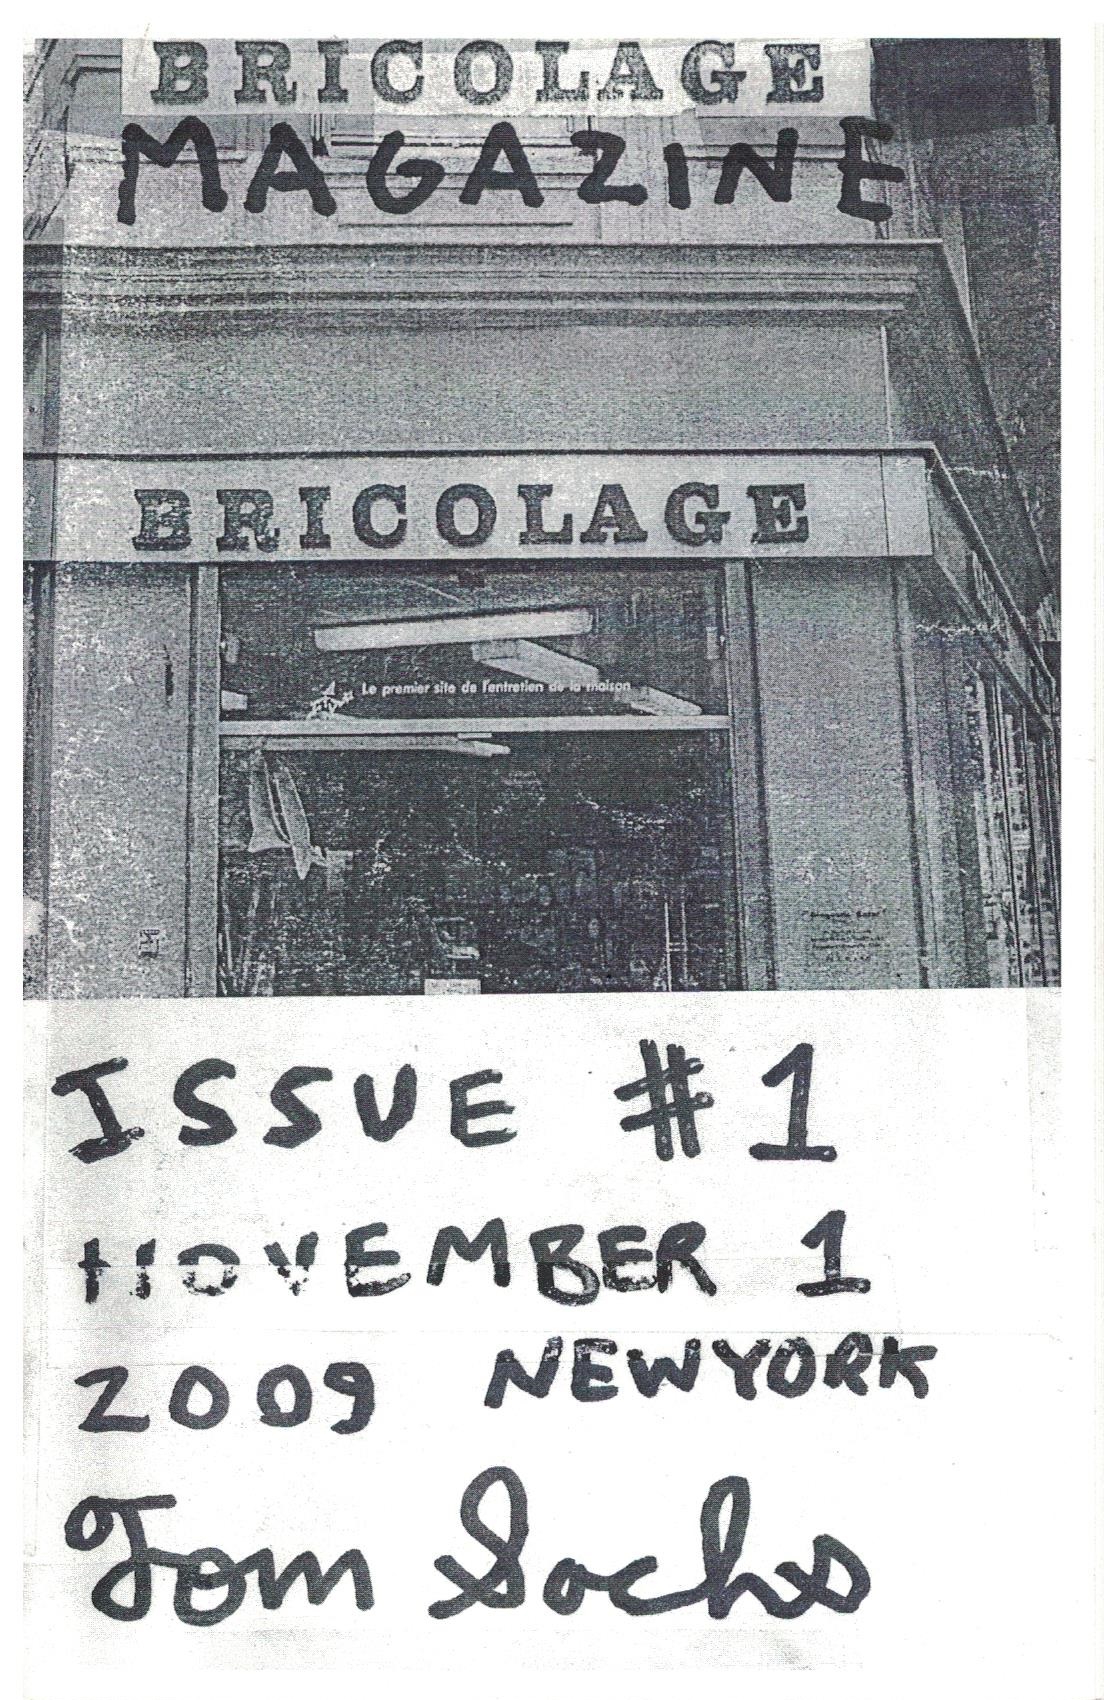 (SACHS, TOM). Sachs, Tom - TOM SACHS: BRICOLAGE MAGAZINE ISSUE #1 - NOVEMBER 1, 2009, NEW YORK